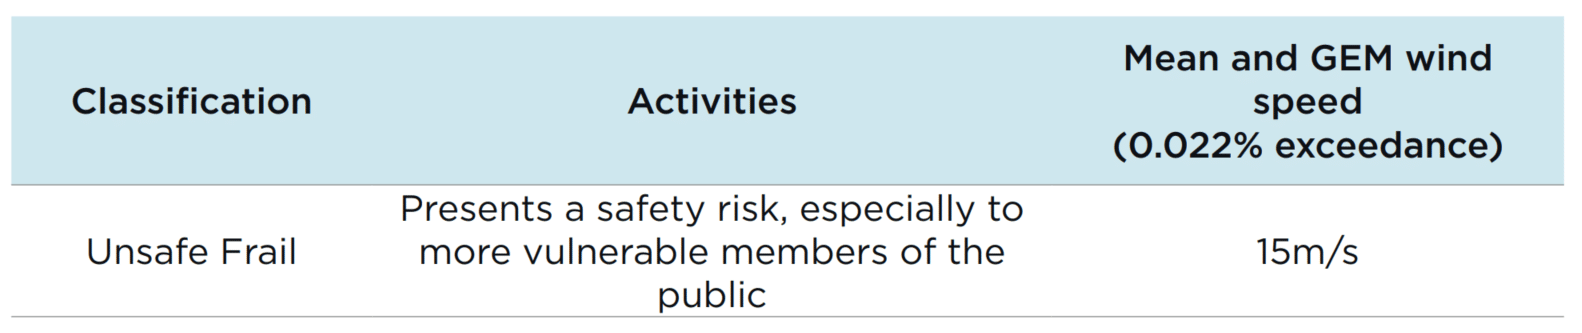 City of London Criteria - Safety